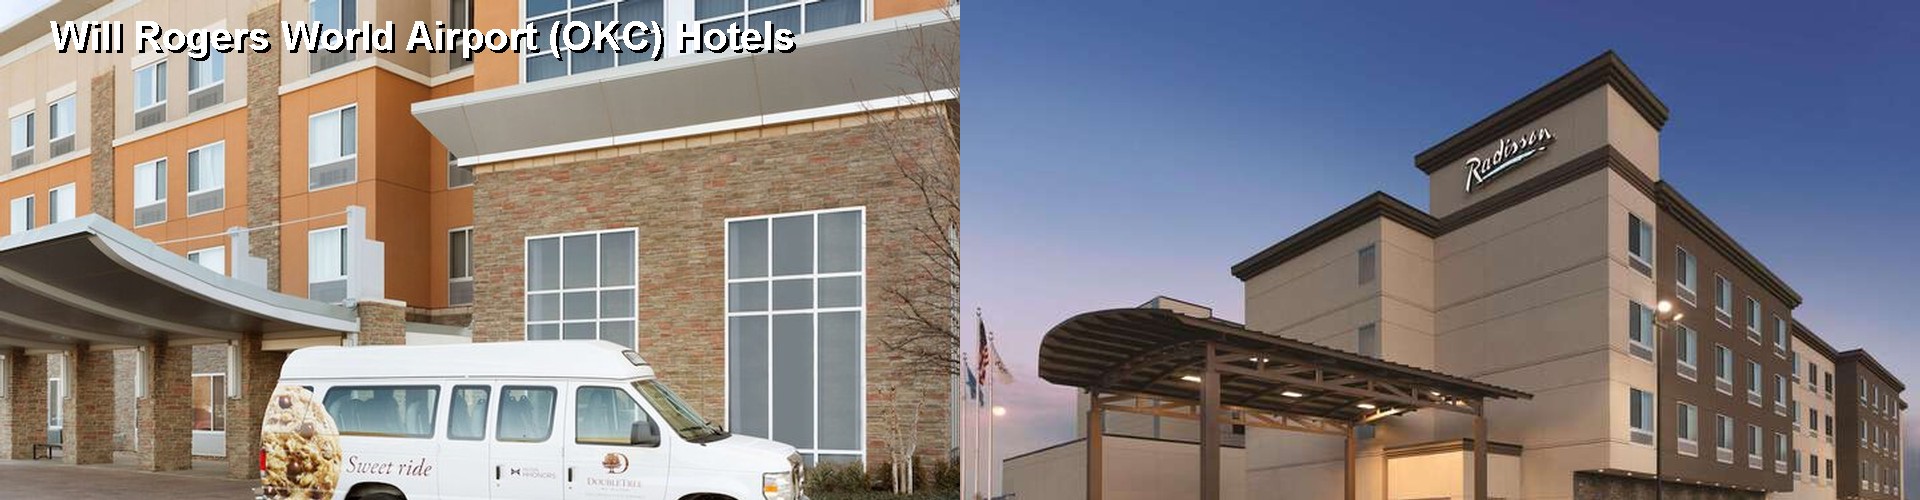 5 Best Hotels near Will Rogers World Airport (OKC)